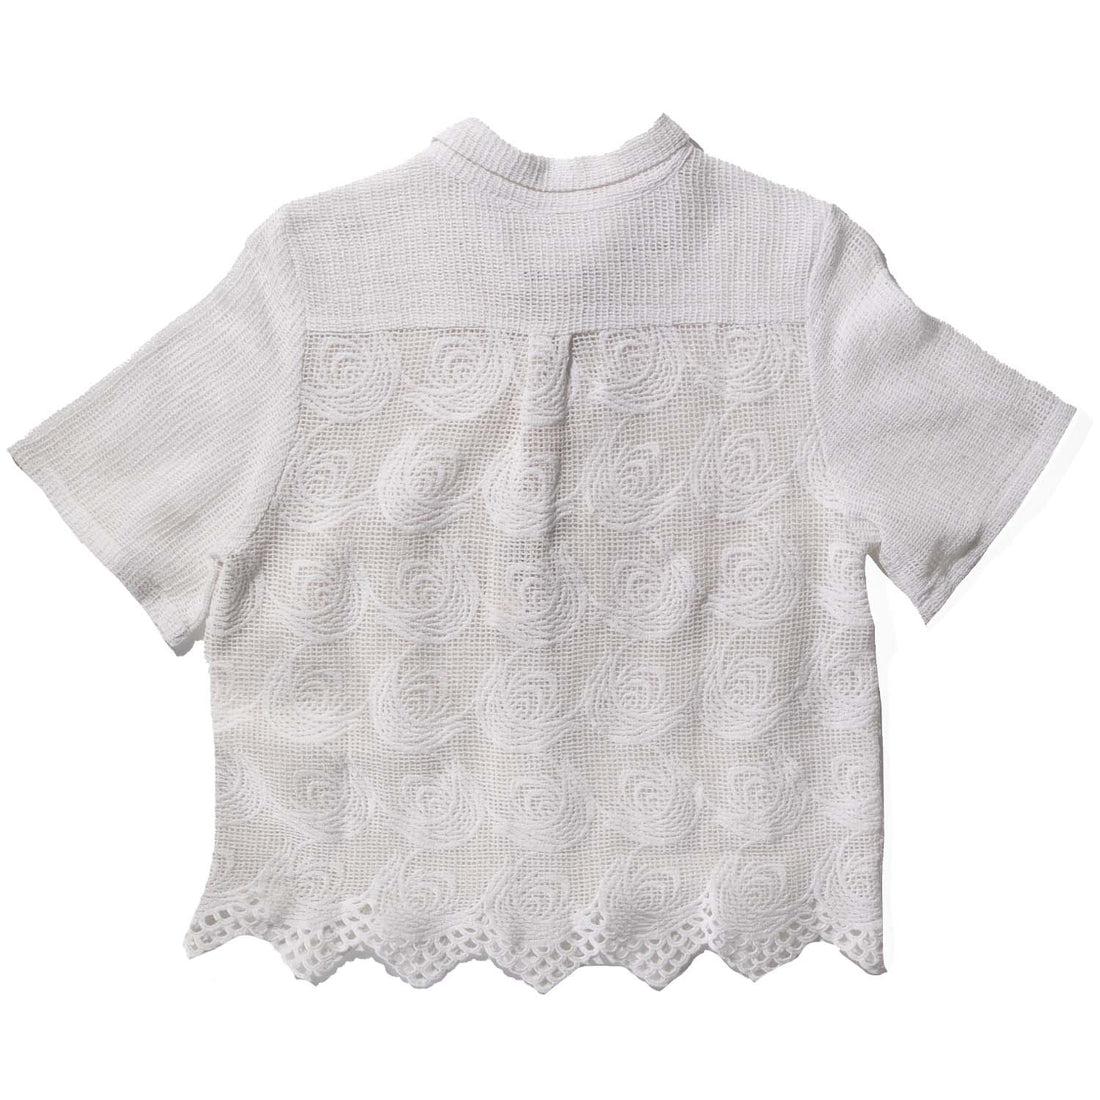 Caron Callahan JoJo Shirt in Swirl Cotton Crochet